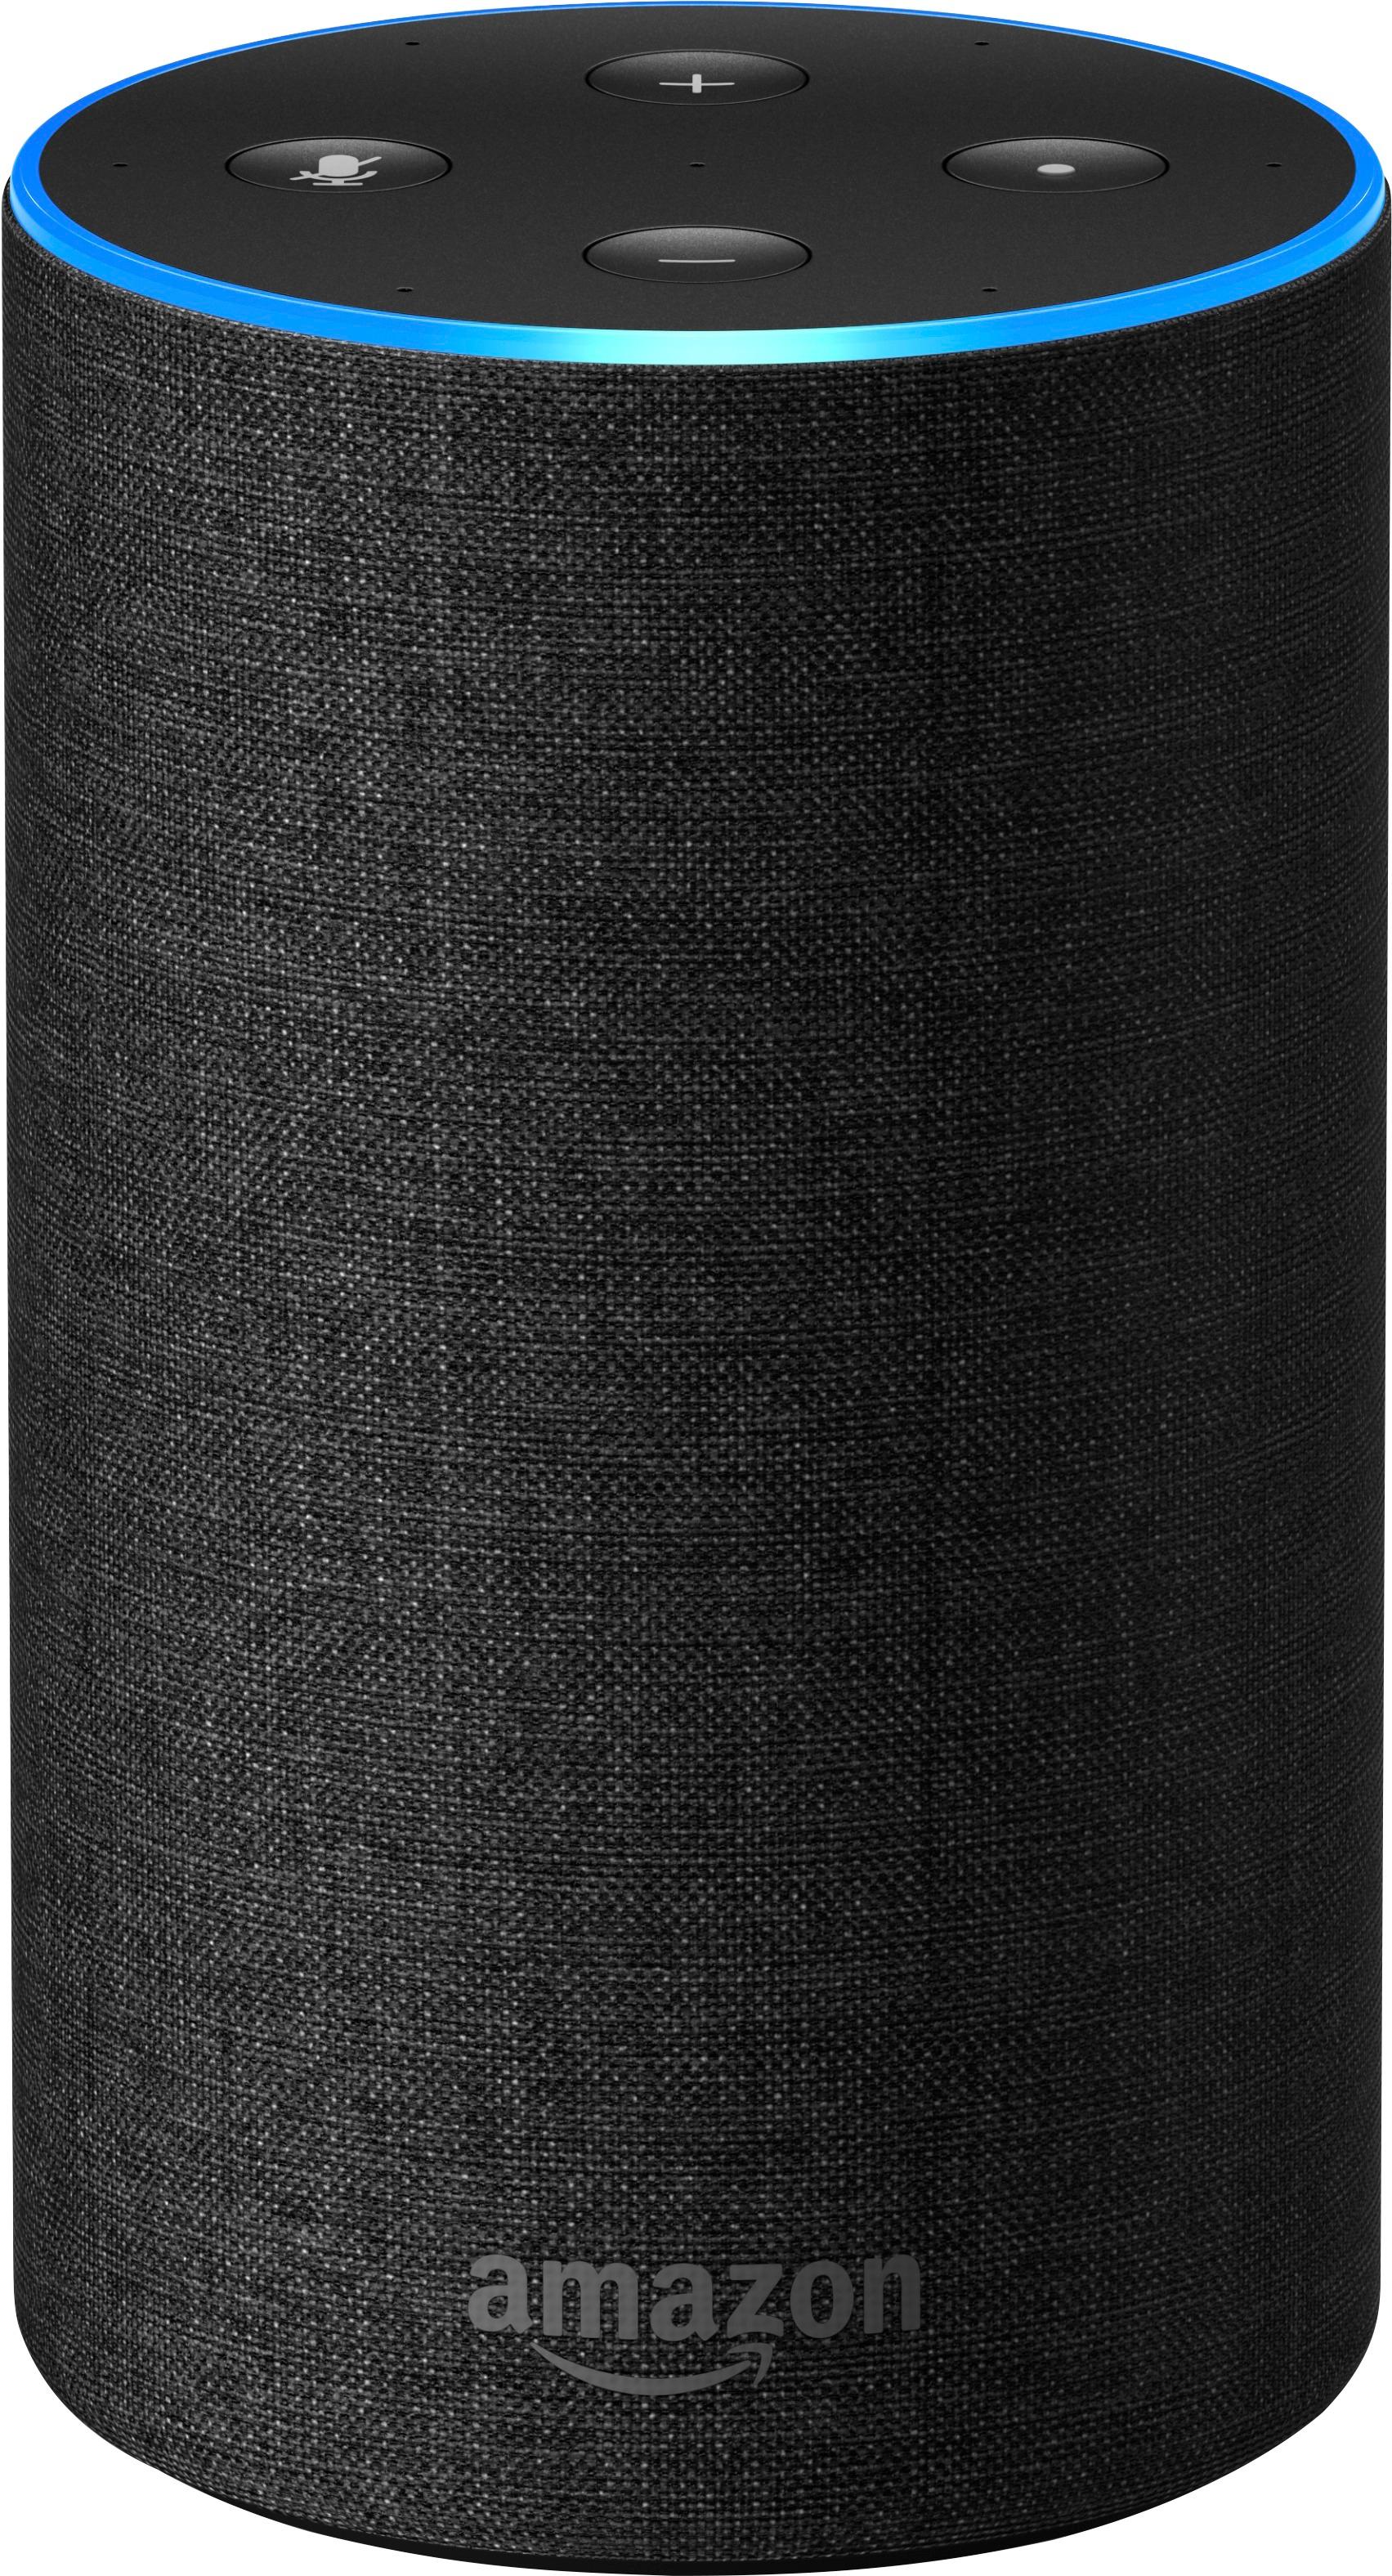 Amazon Echo New 2nd Generation Black Charcoal Fabric Alexa Smart Home 